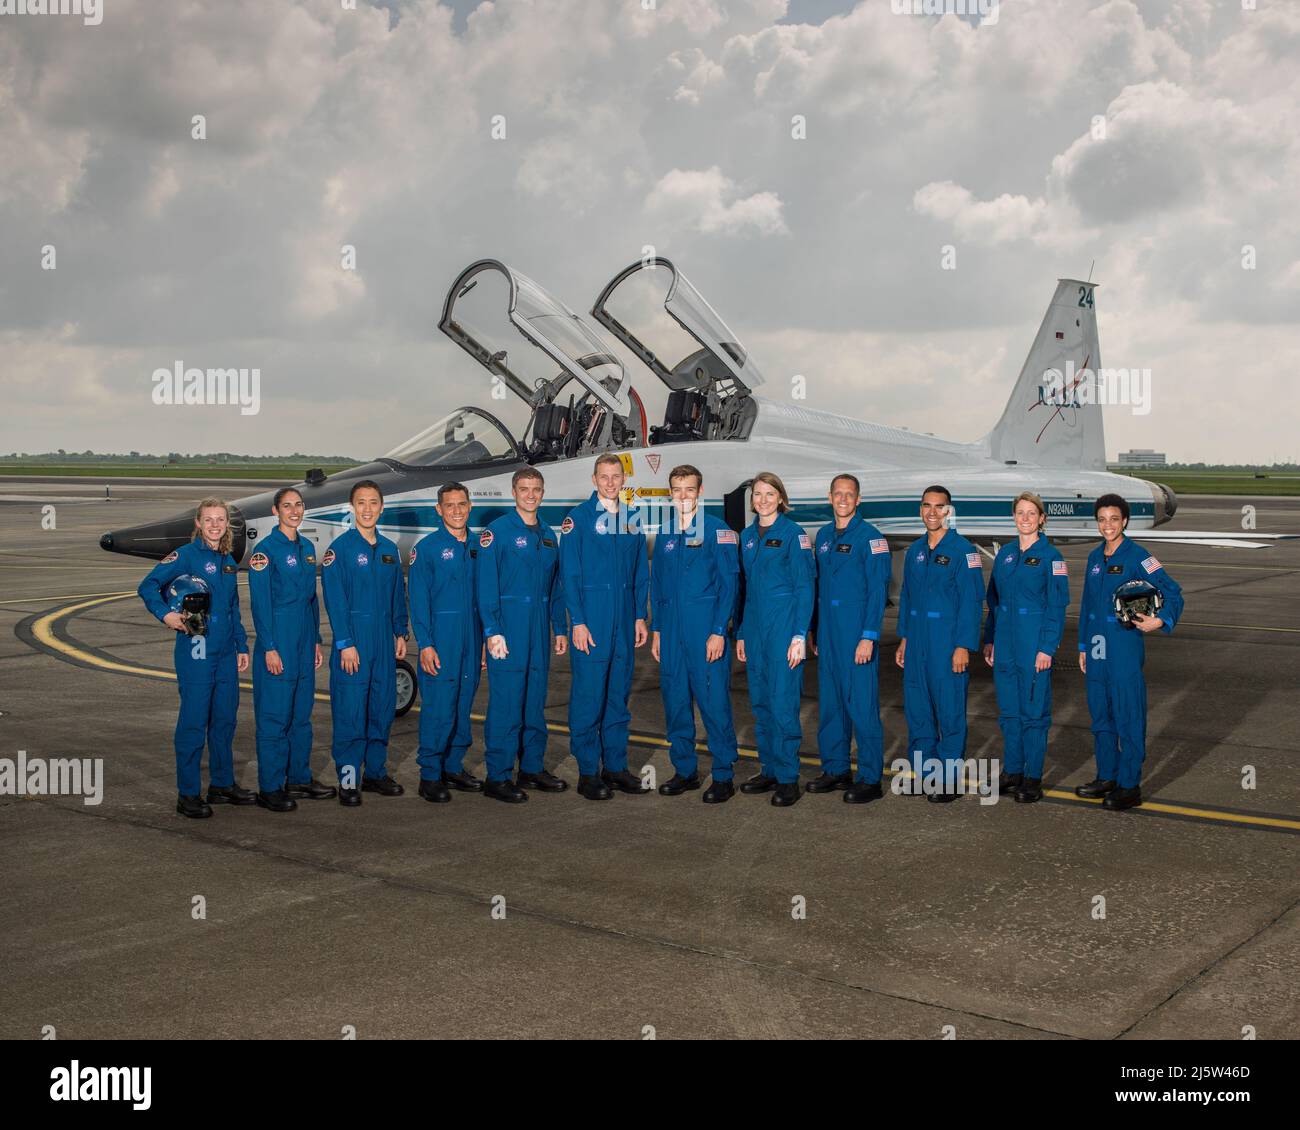 2017 NASA-Astronauten-Kandidaten. Foto-Datum: 6. Juni 2017. Ort: Ellington Field - Hangar 276, Tarmac. Fotograf: Robert Markowitz Stockfoto